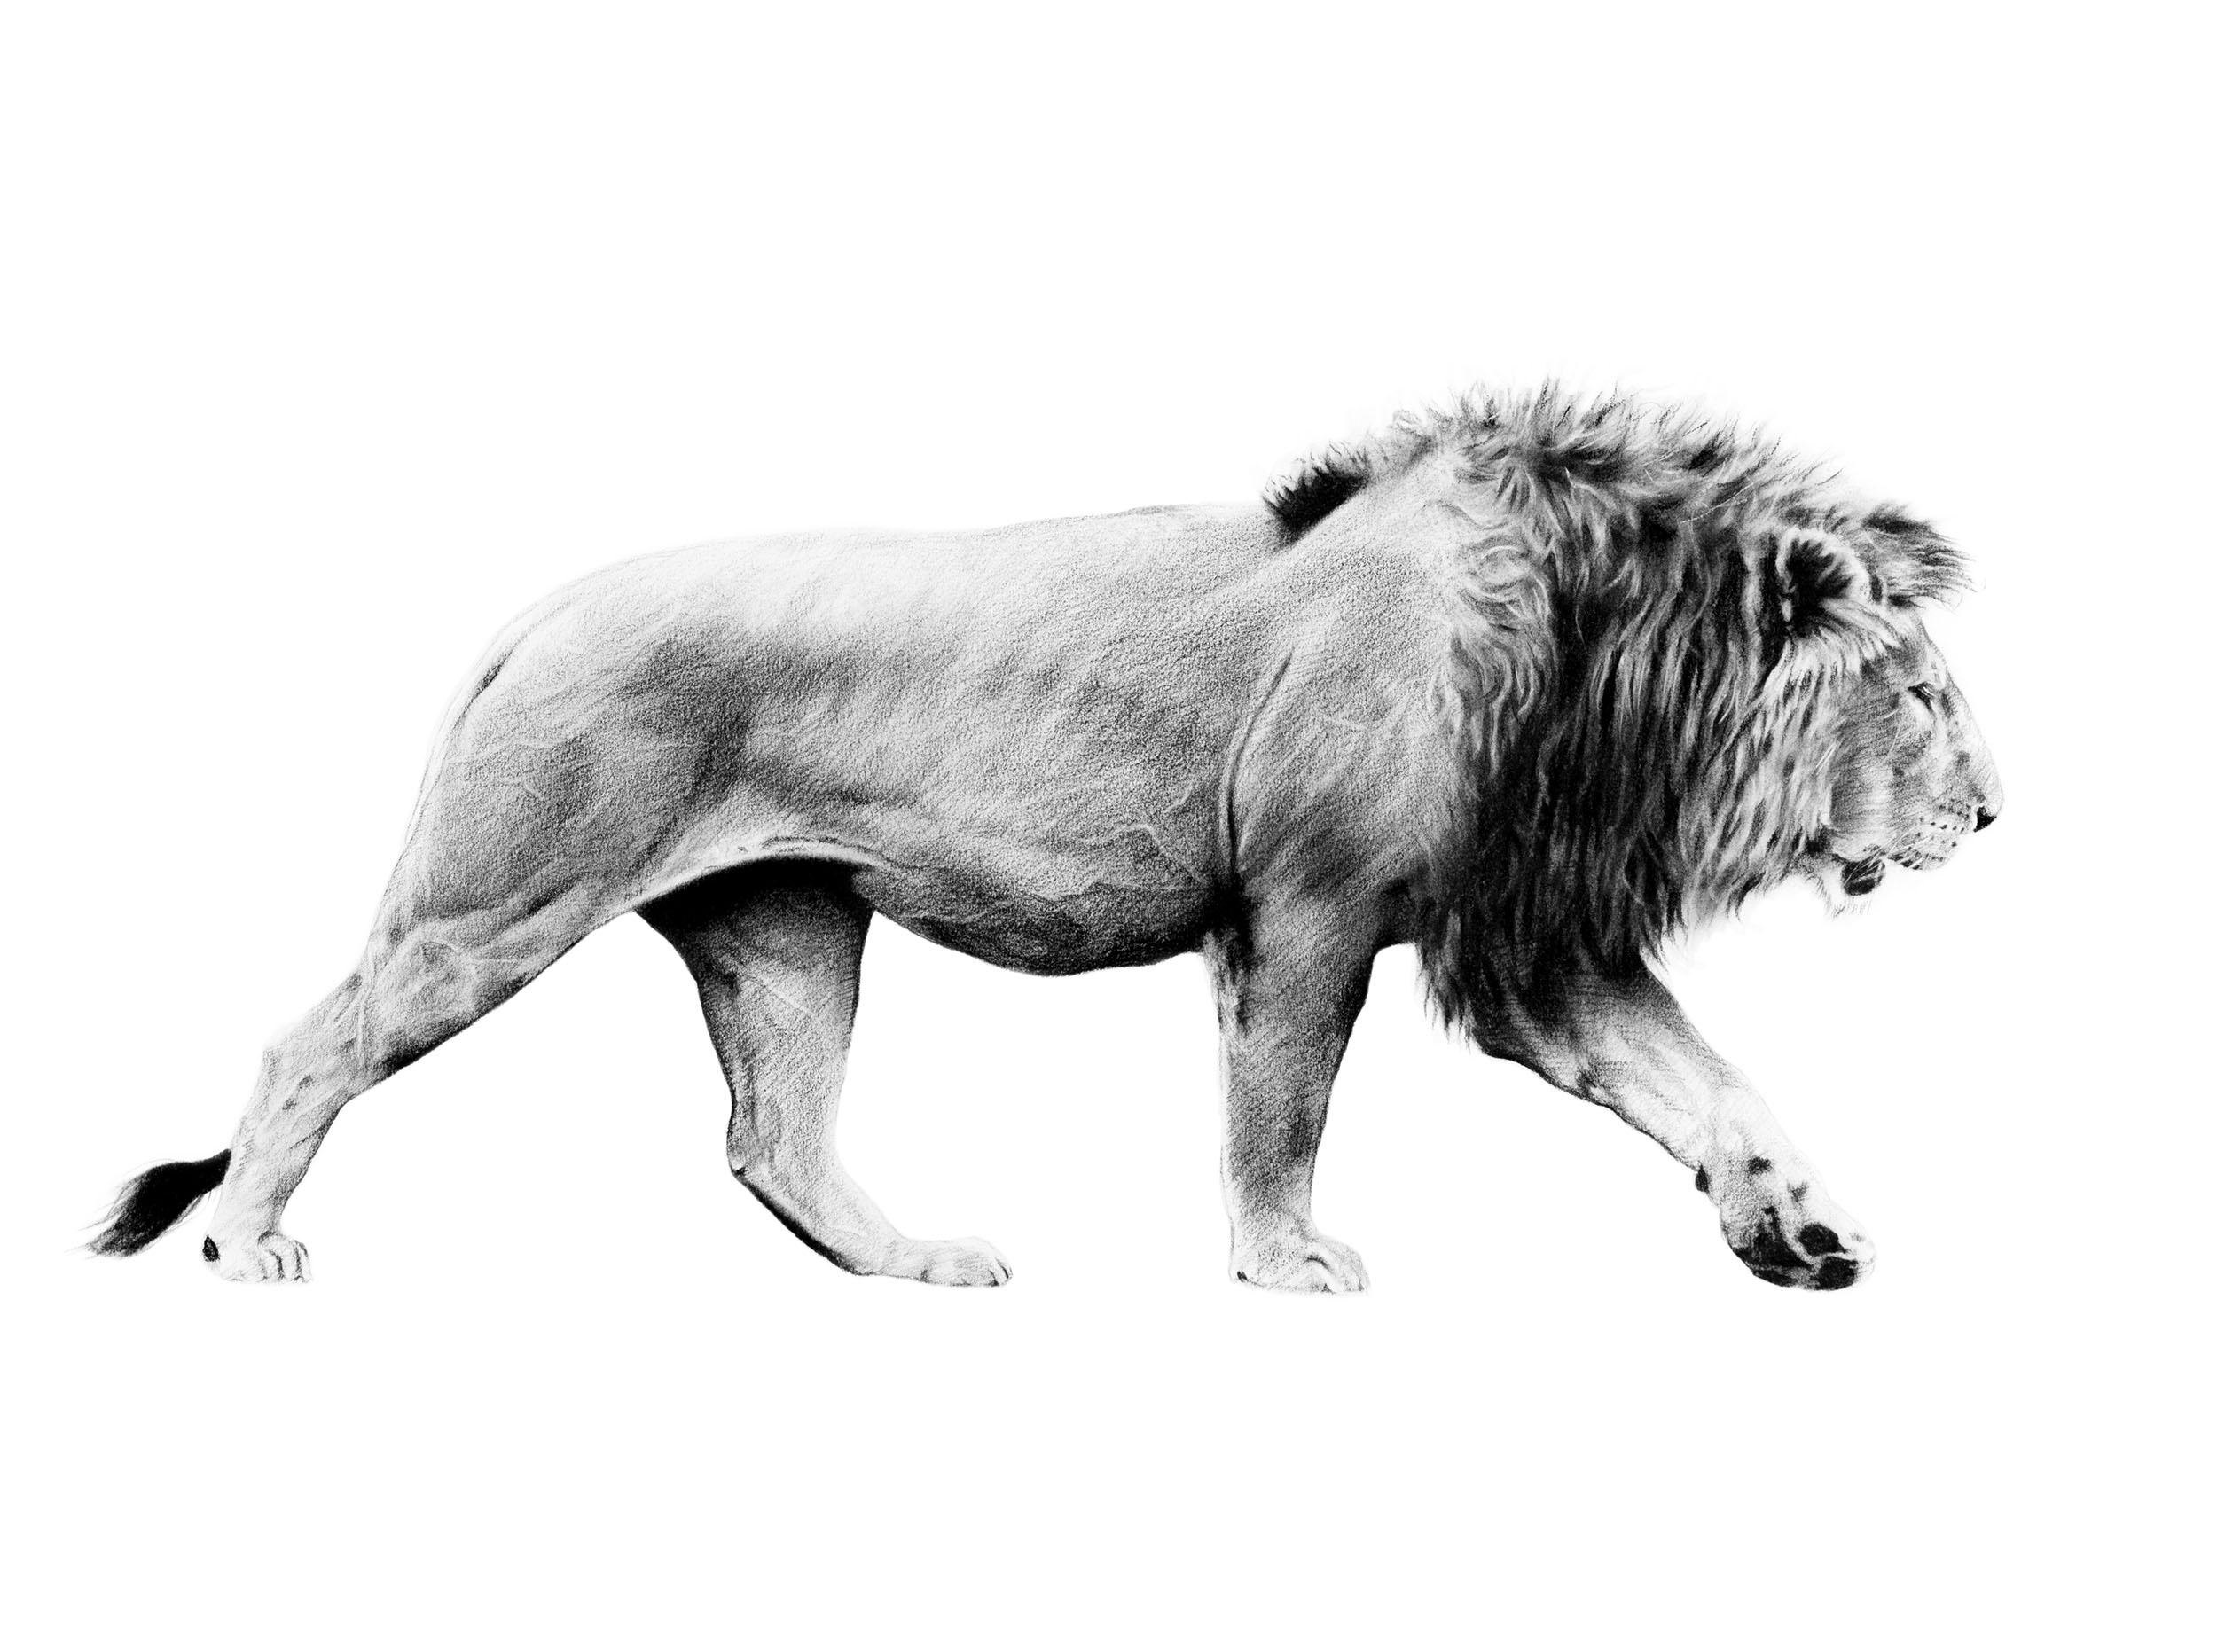 lion_pacing-50x37cms.jpg